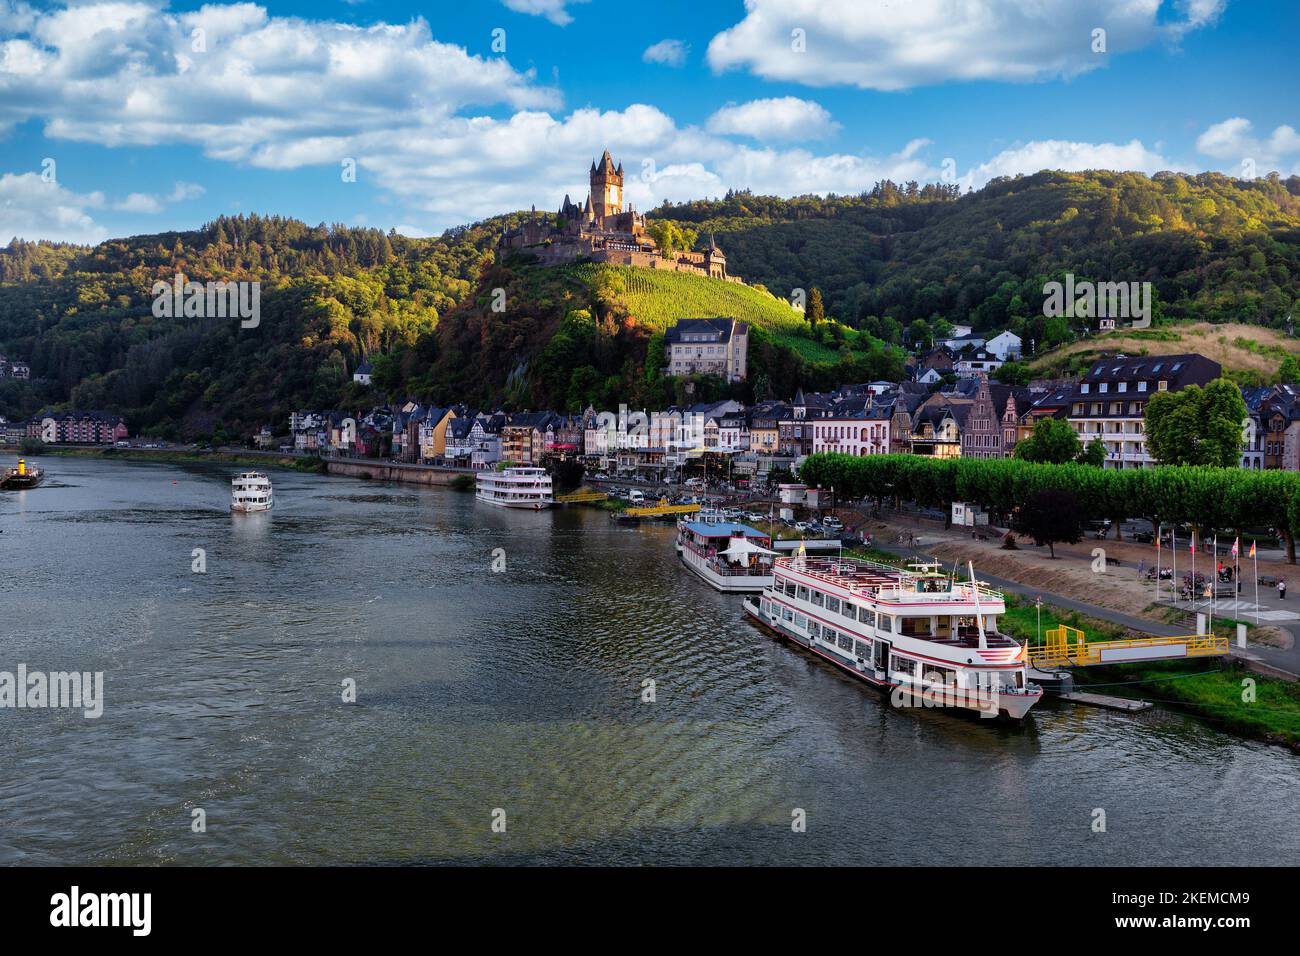 Landmarks of Germany - medieval Cochem town, Rhine river cruises Stock Photo